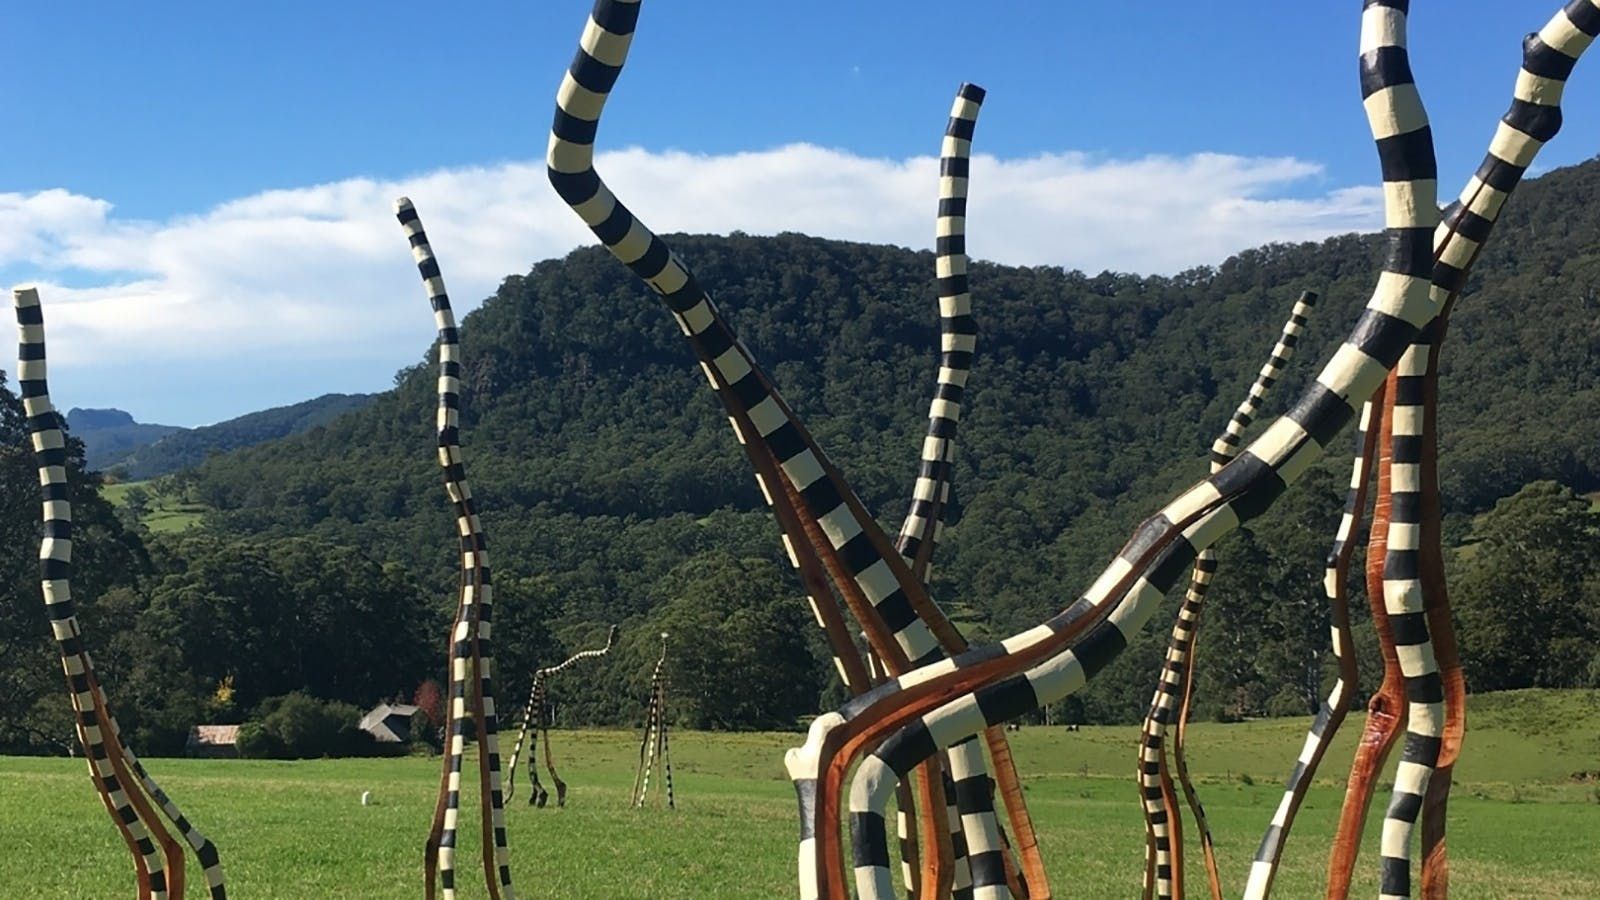 Kangaroo Valley Sculpture in the Valley